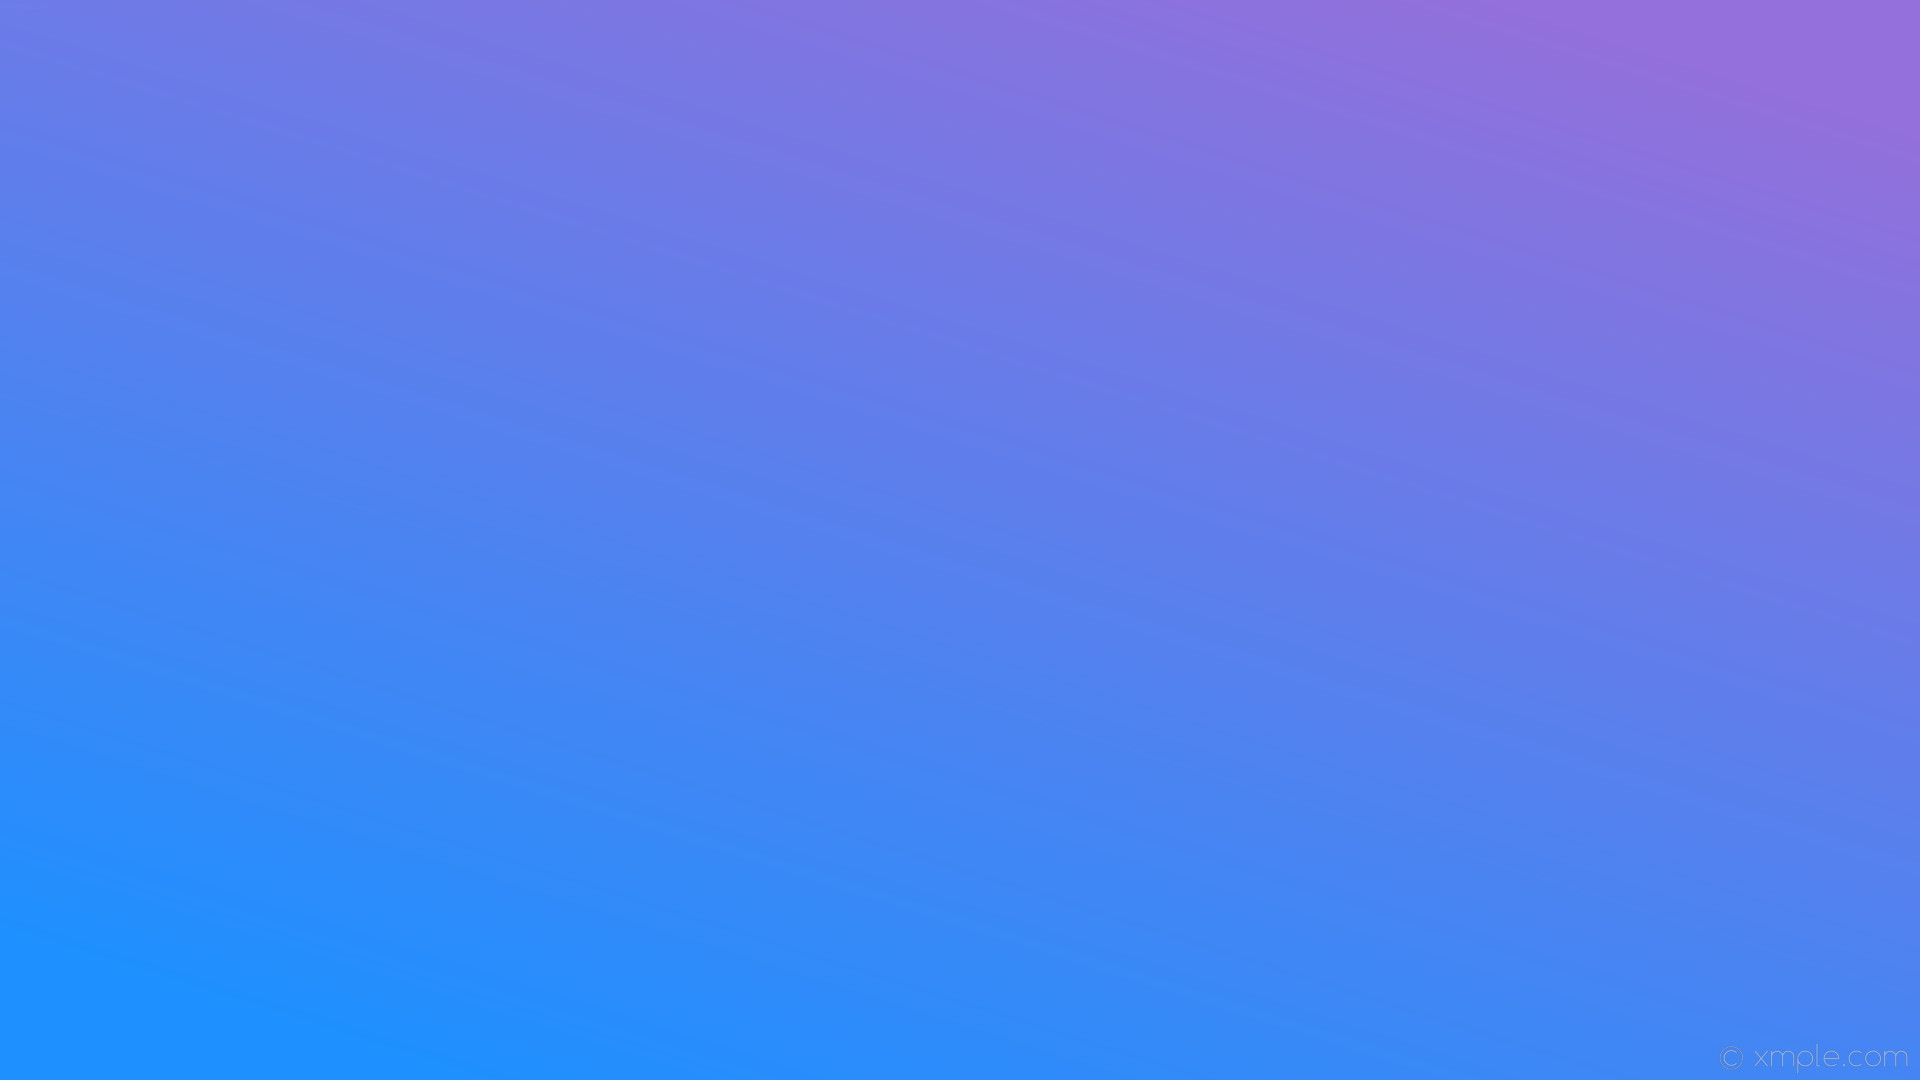 1920x1080 wallpaper gradient purple blue linear dodger blue medium purple #1e90ff  #9370db 225Â°